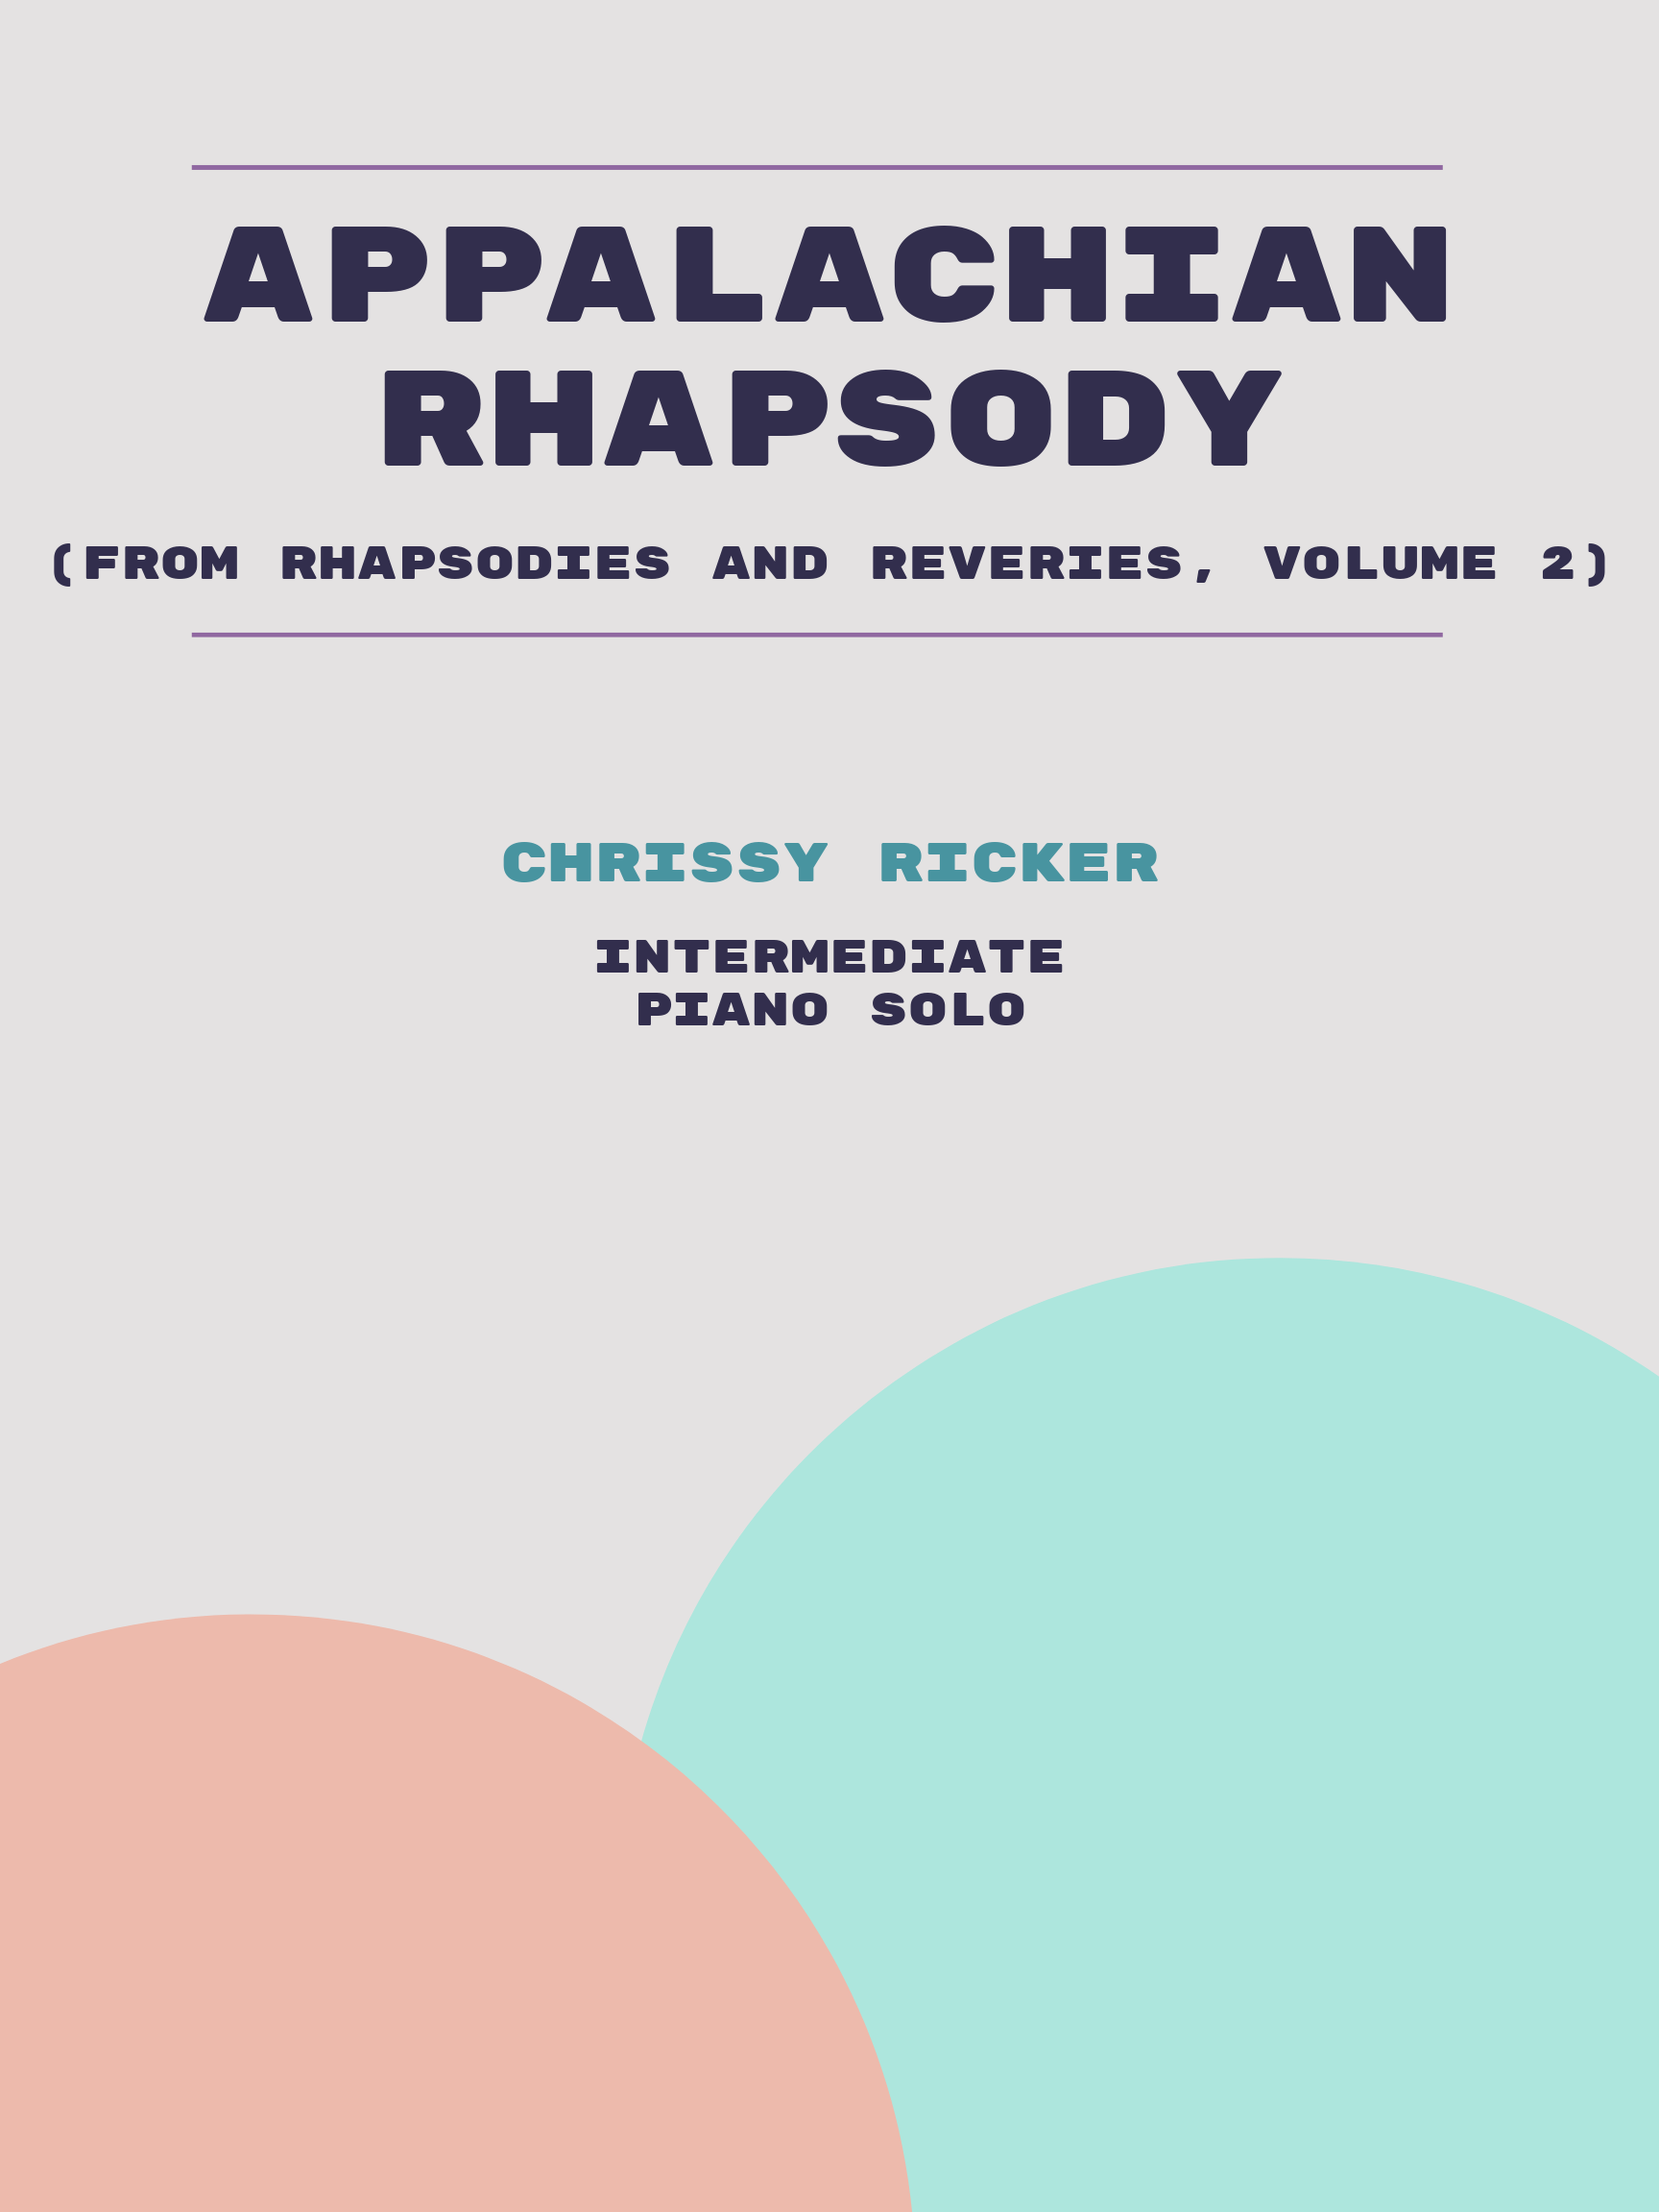 Appalachian Rhapsody by Chrissy Ricker